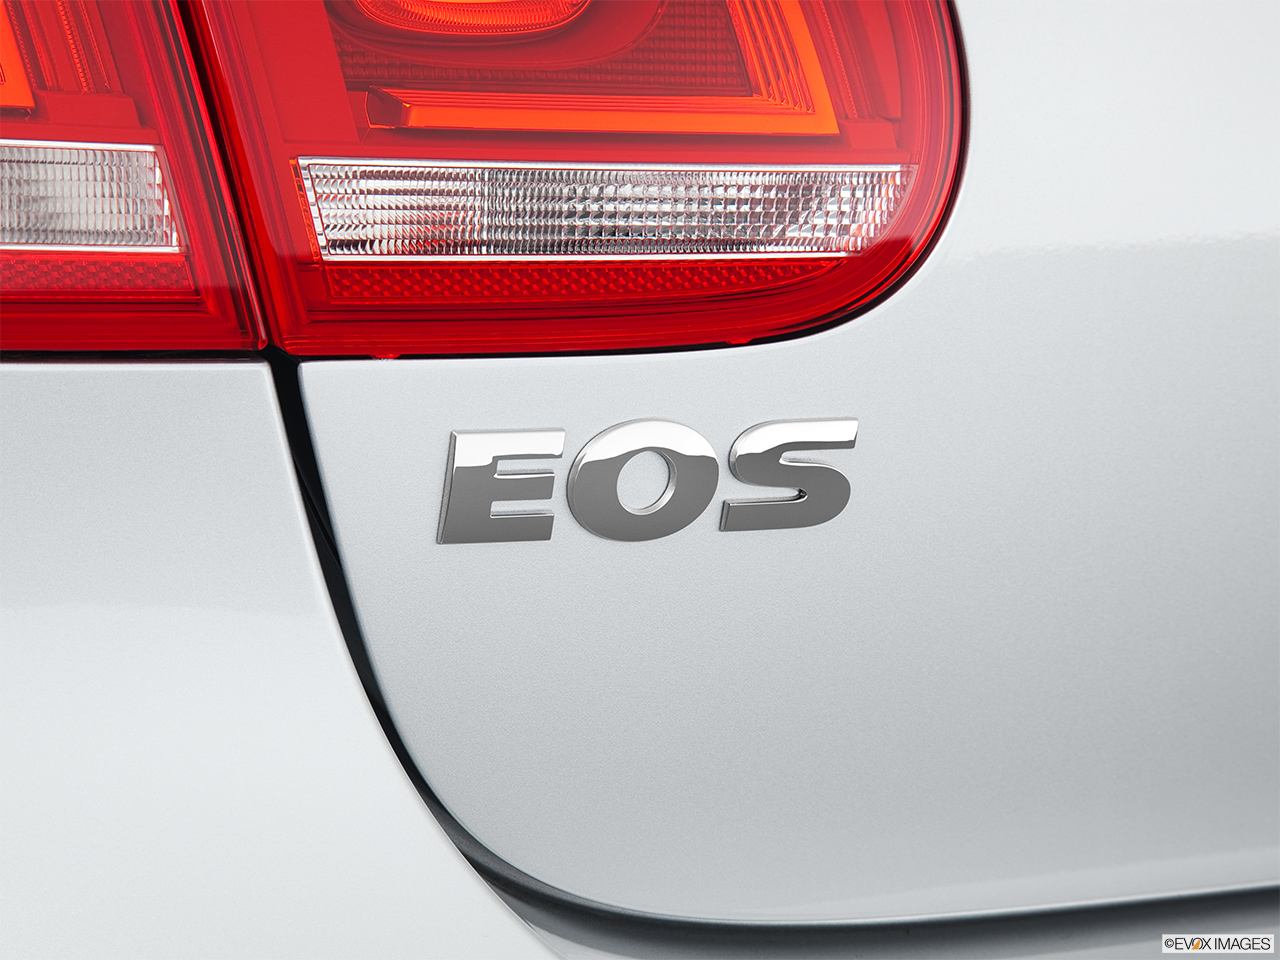 2012 Volkswagen Eos Lux Rear model badge/emblem 